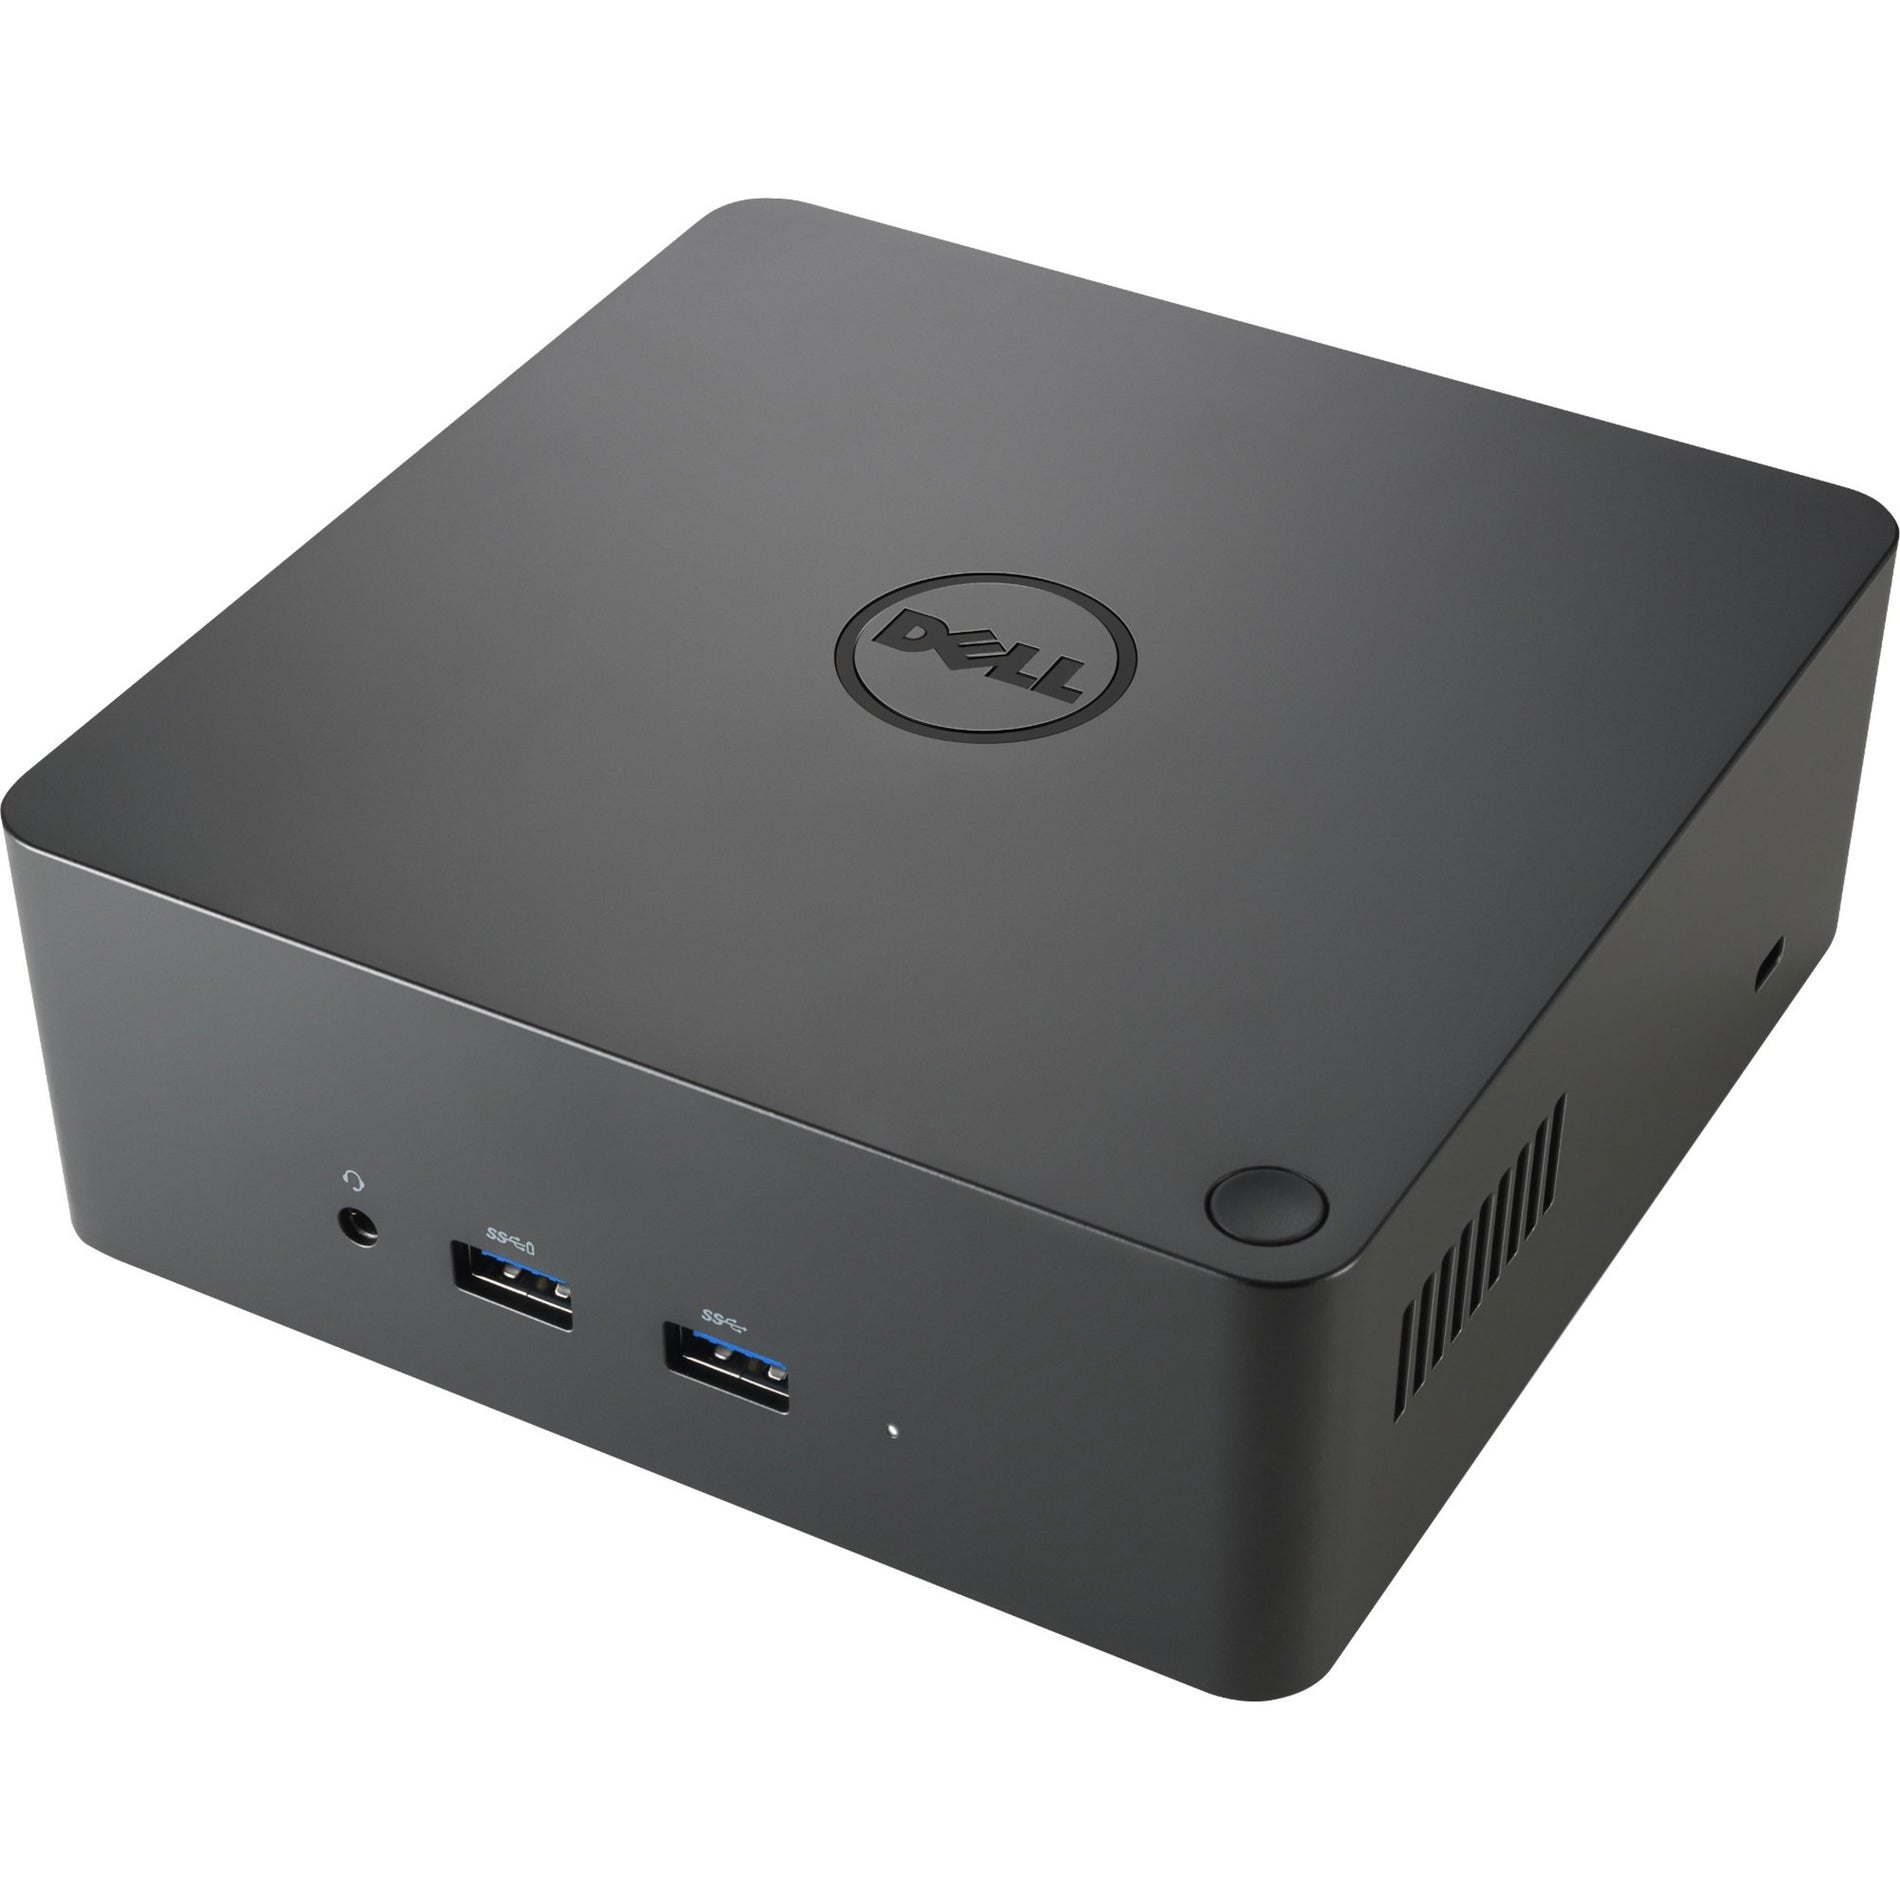 Dell 452-BCNP Thunderbolt Dock TB16 - 180W, Docking Station with VGA, HDMI, DisplayPort, Thunderbolt 3, and USB Ports